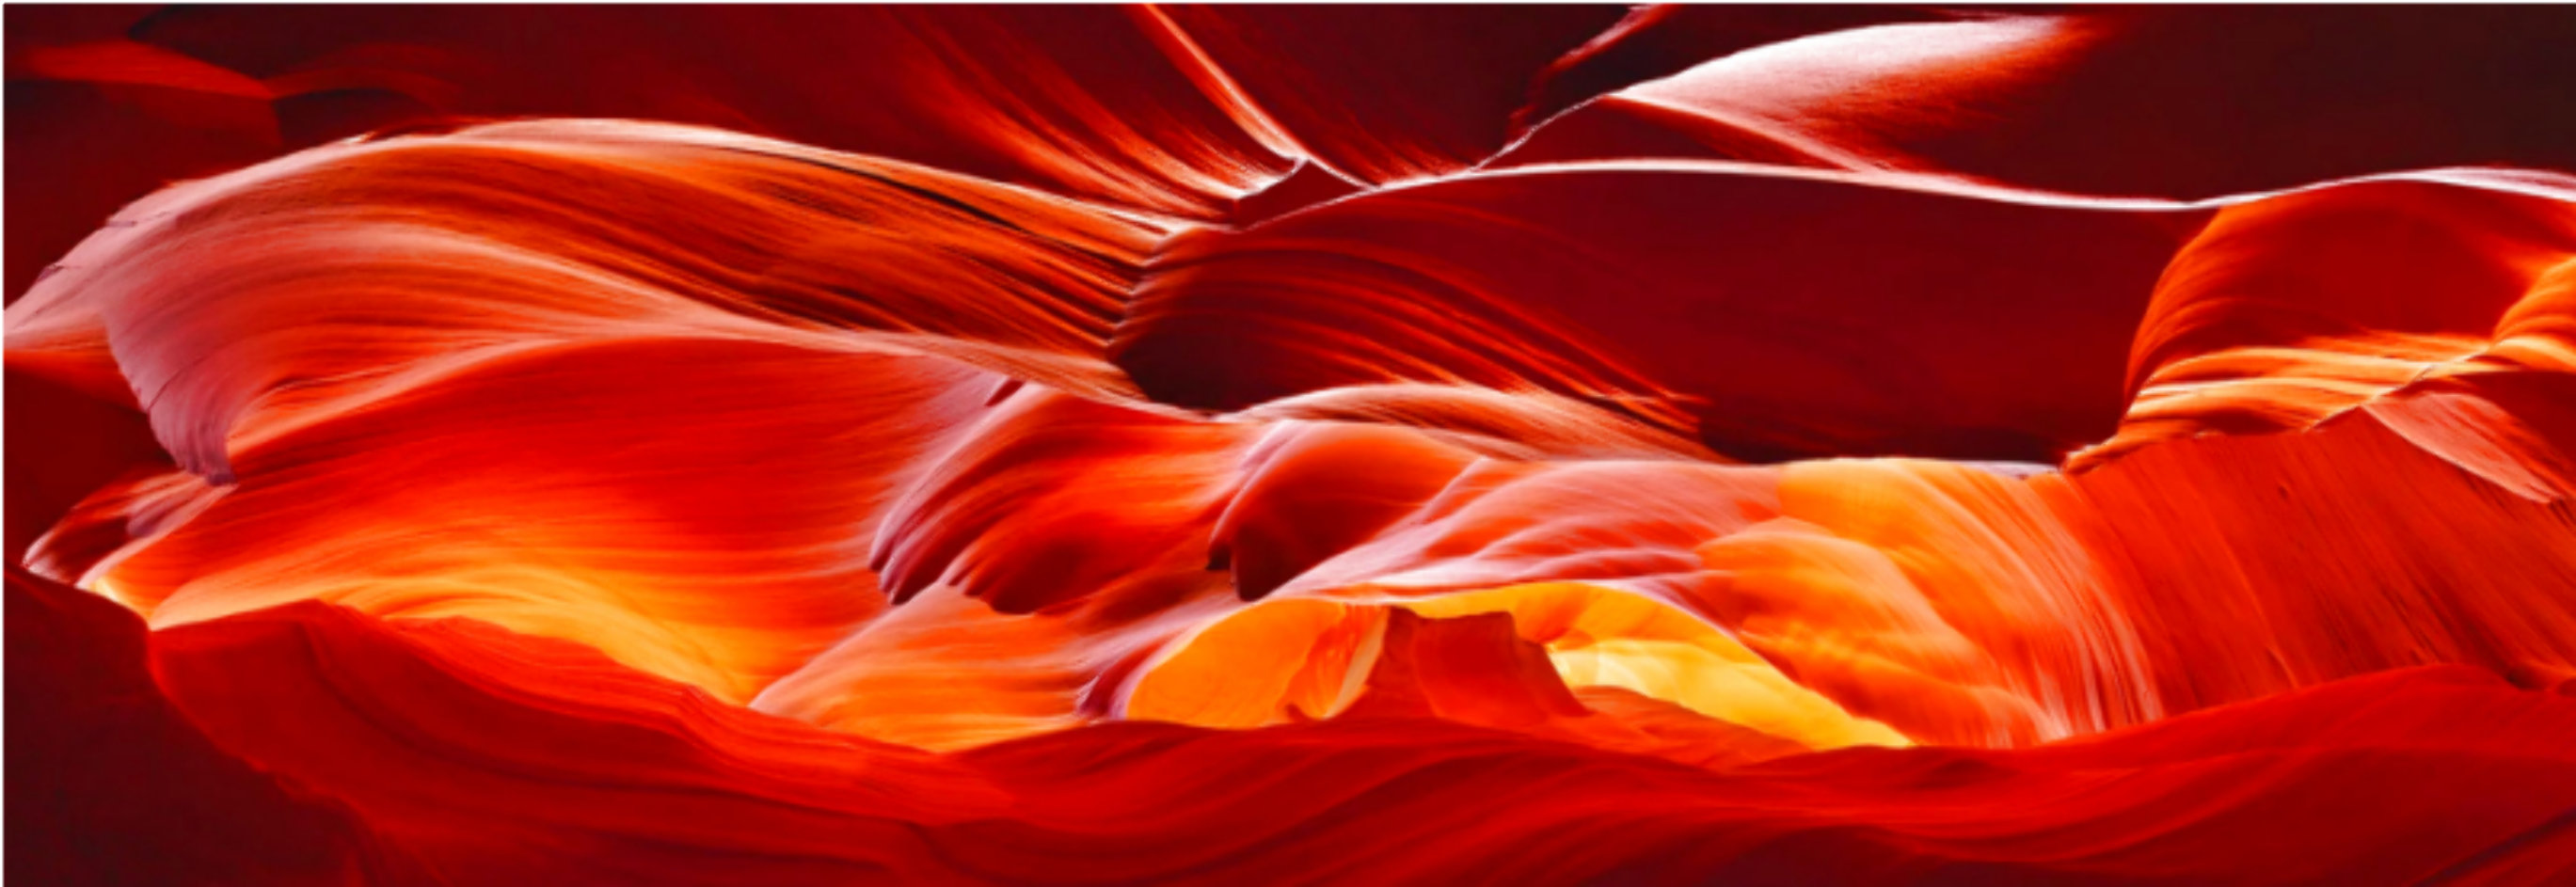 Crimson Tides 2M Huge Panorama by Peter Lik